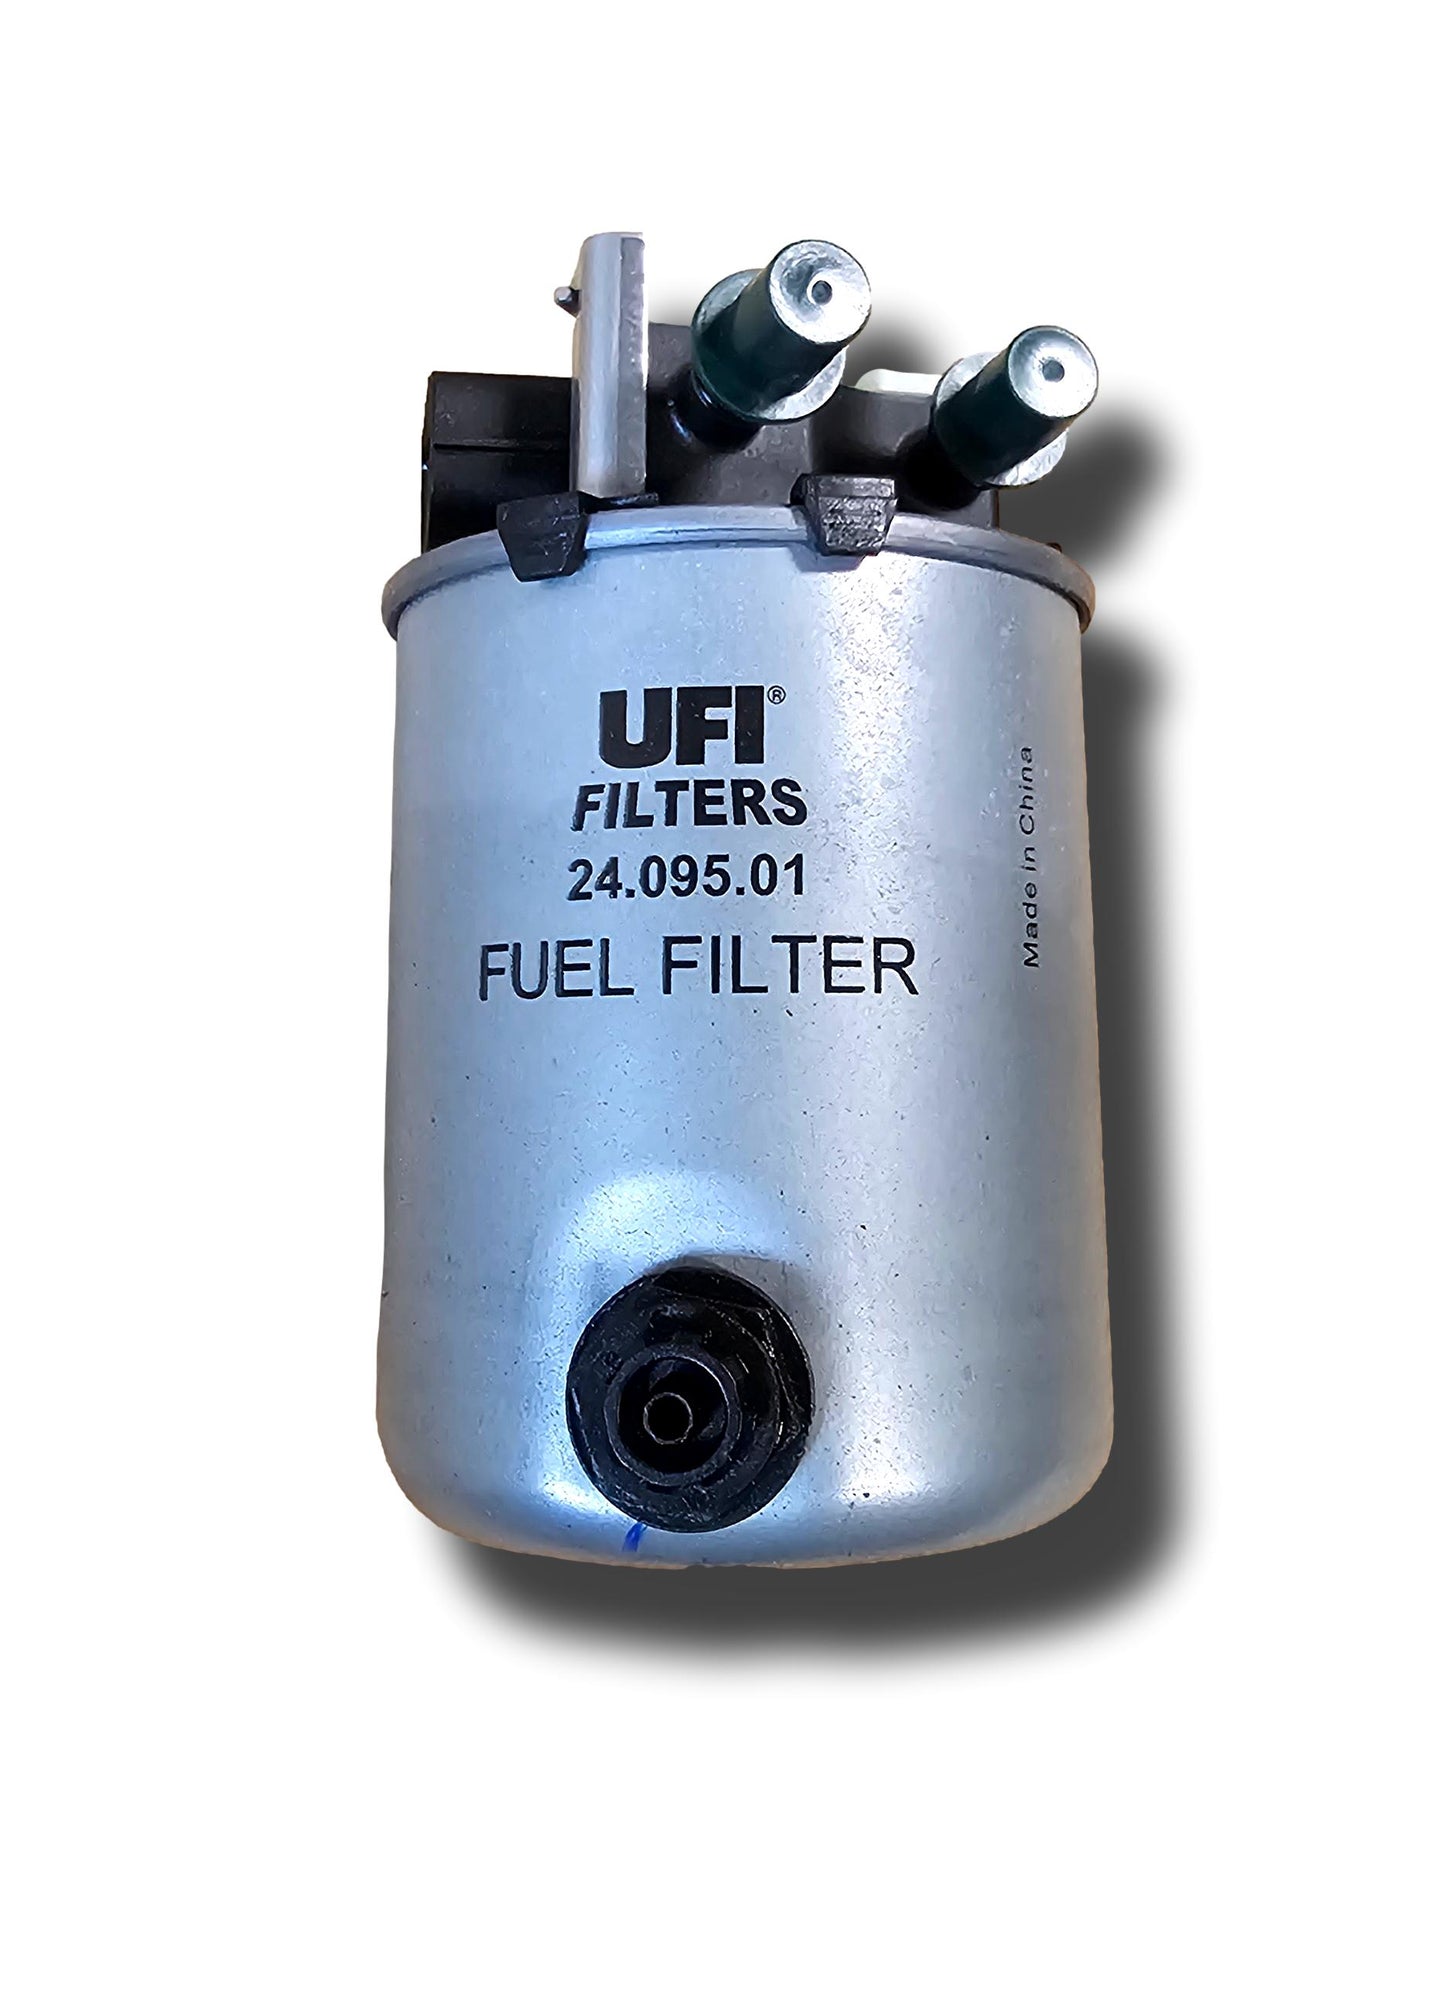 Véritable nouveau filtre à carburant Nissan Qashqai UFI 16400 4EA1B 2018-21